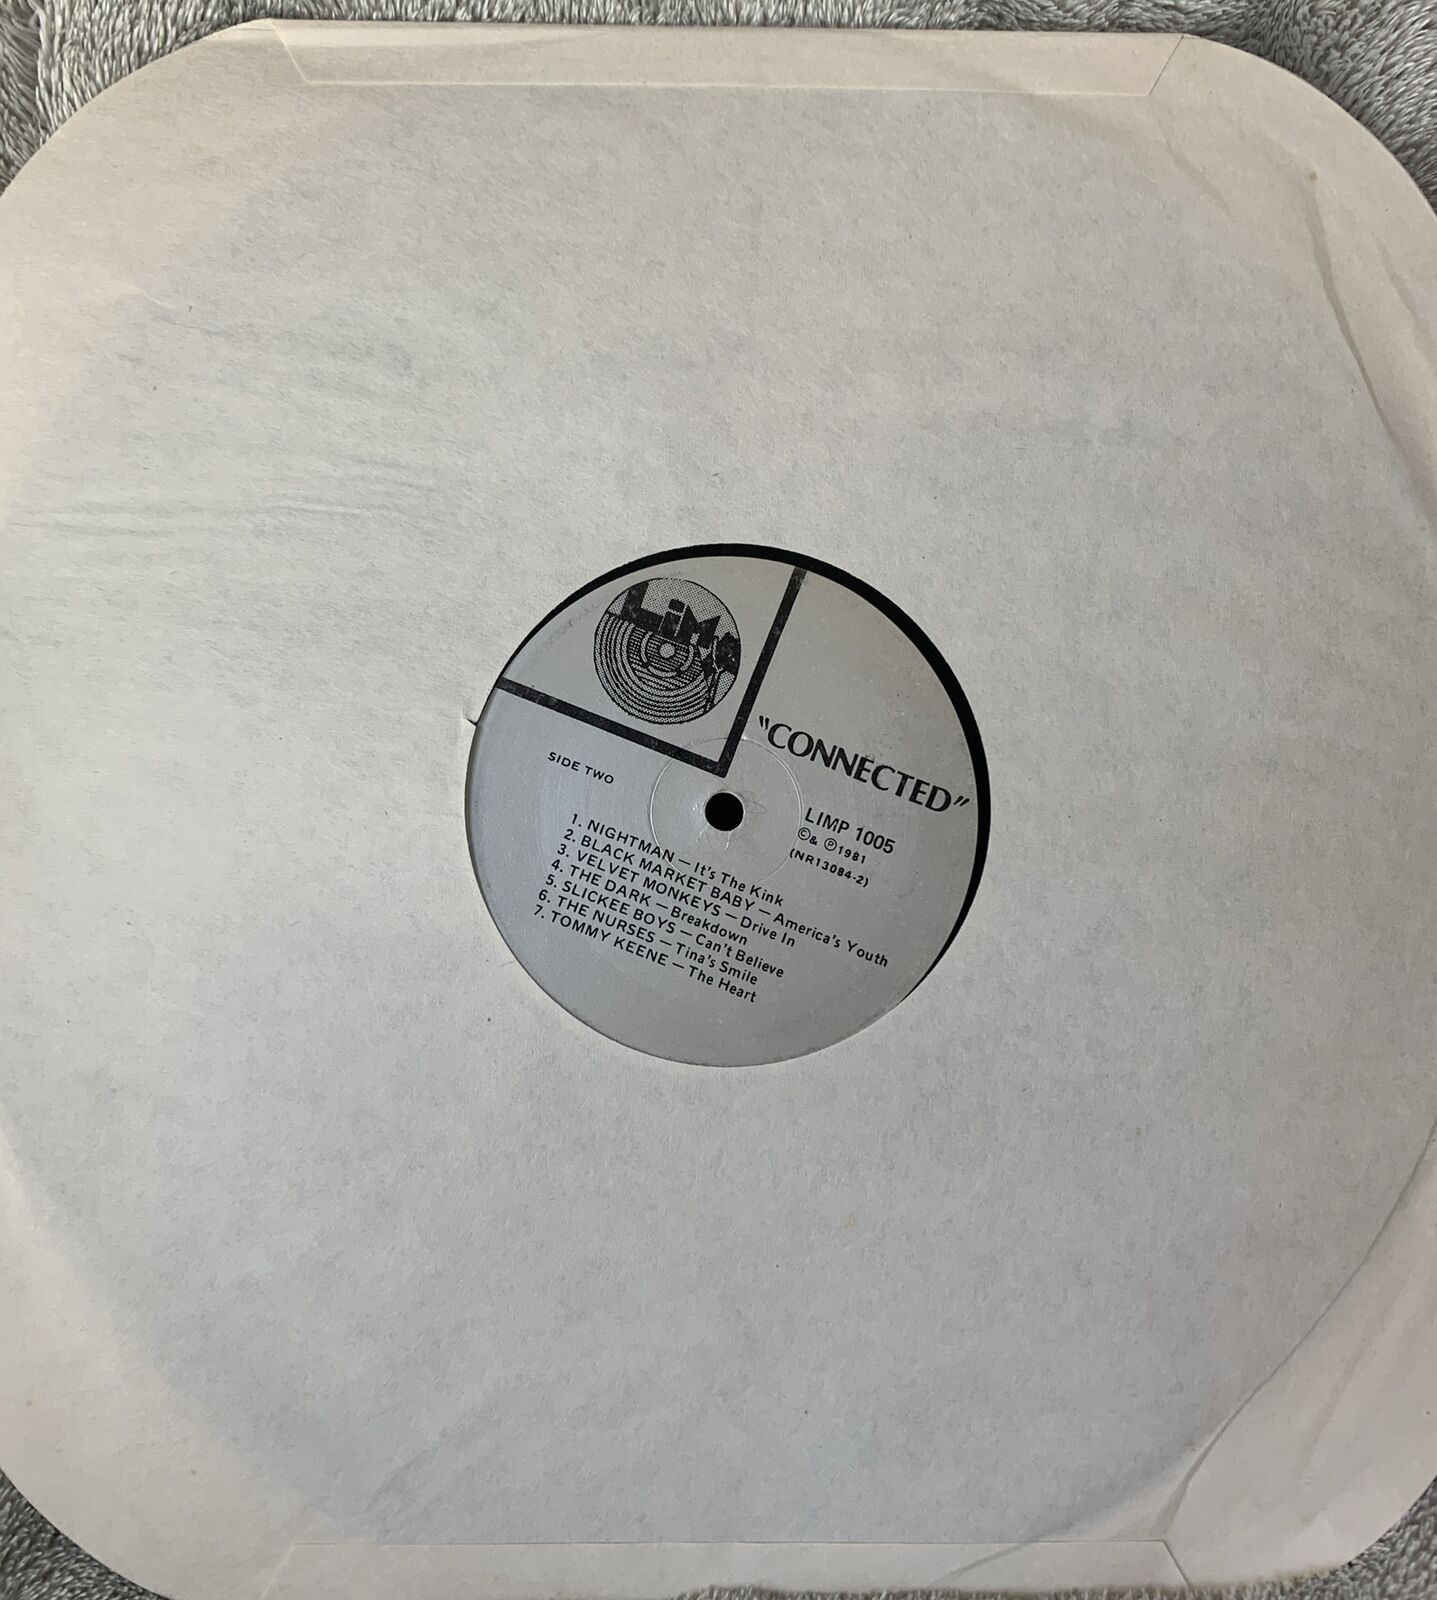 Connected - A DC Rock Sampler LP (LIMP 1005) rare Tommy Keene / Slickee Boys